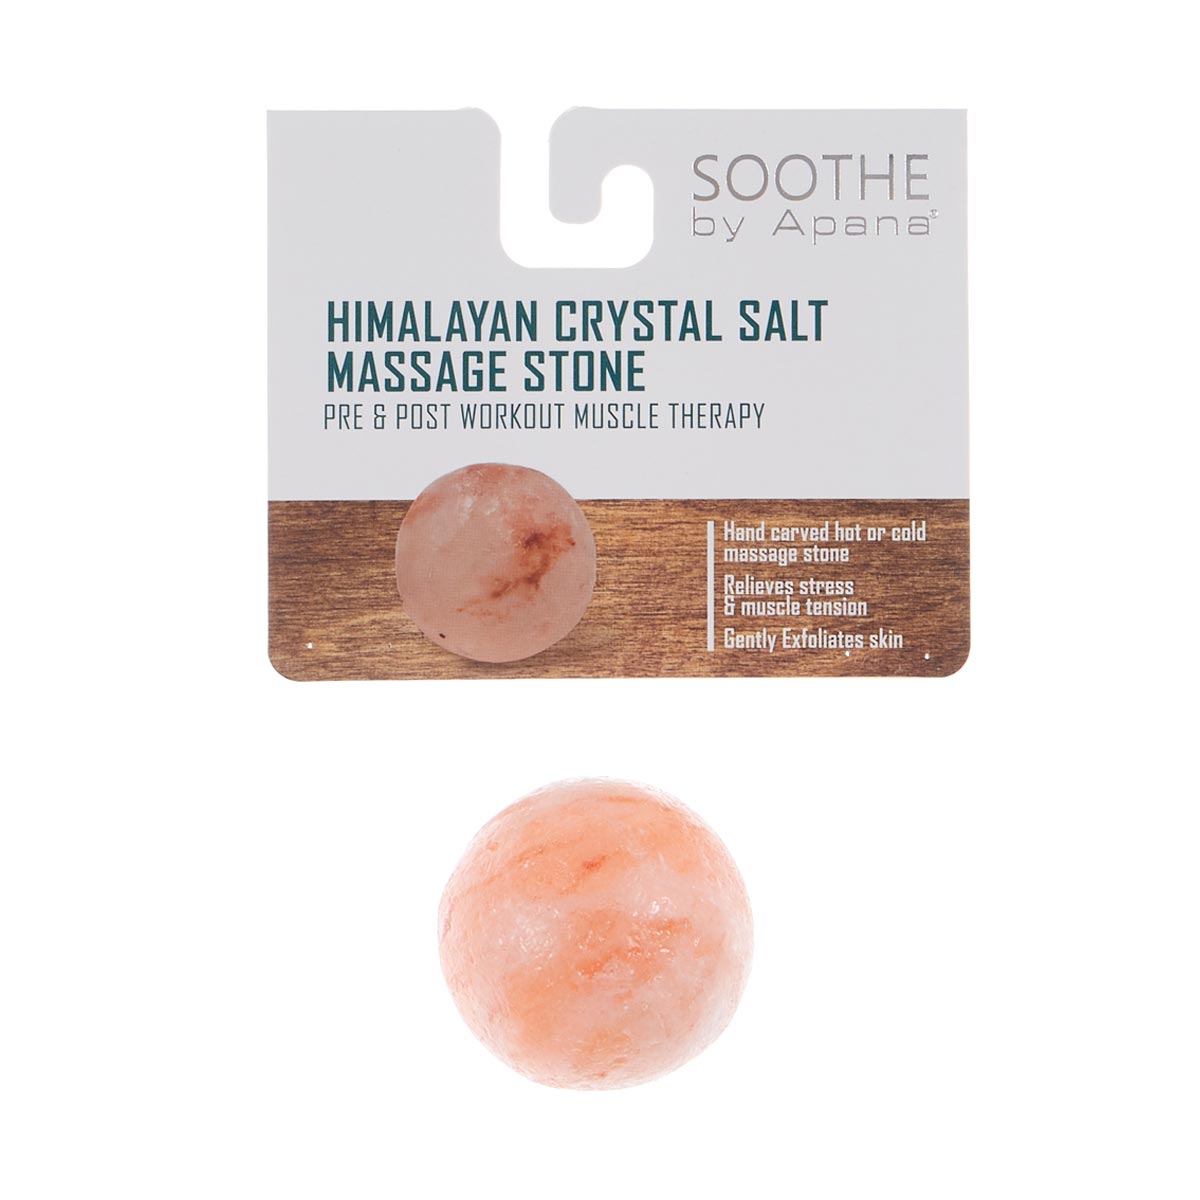 Soothe By Apana Himalayan Crystal Salt Massage Stone